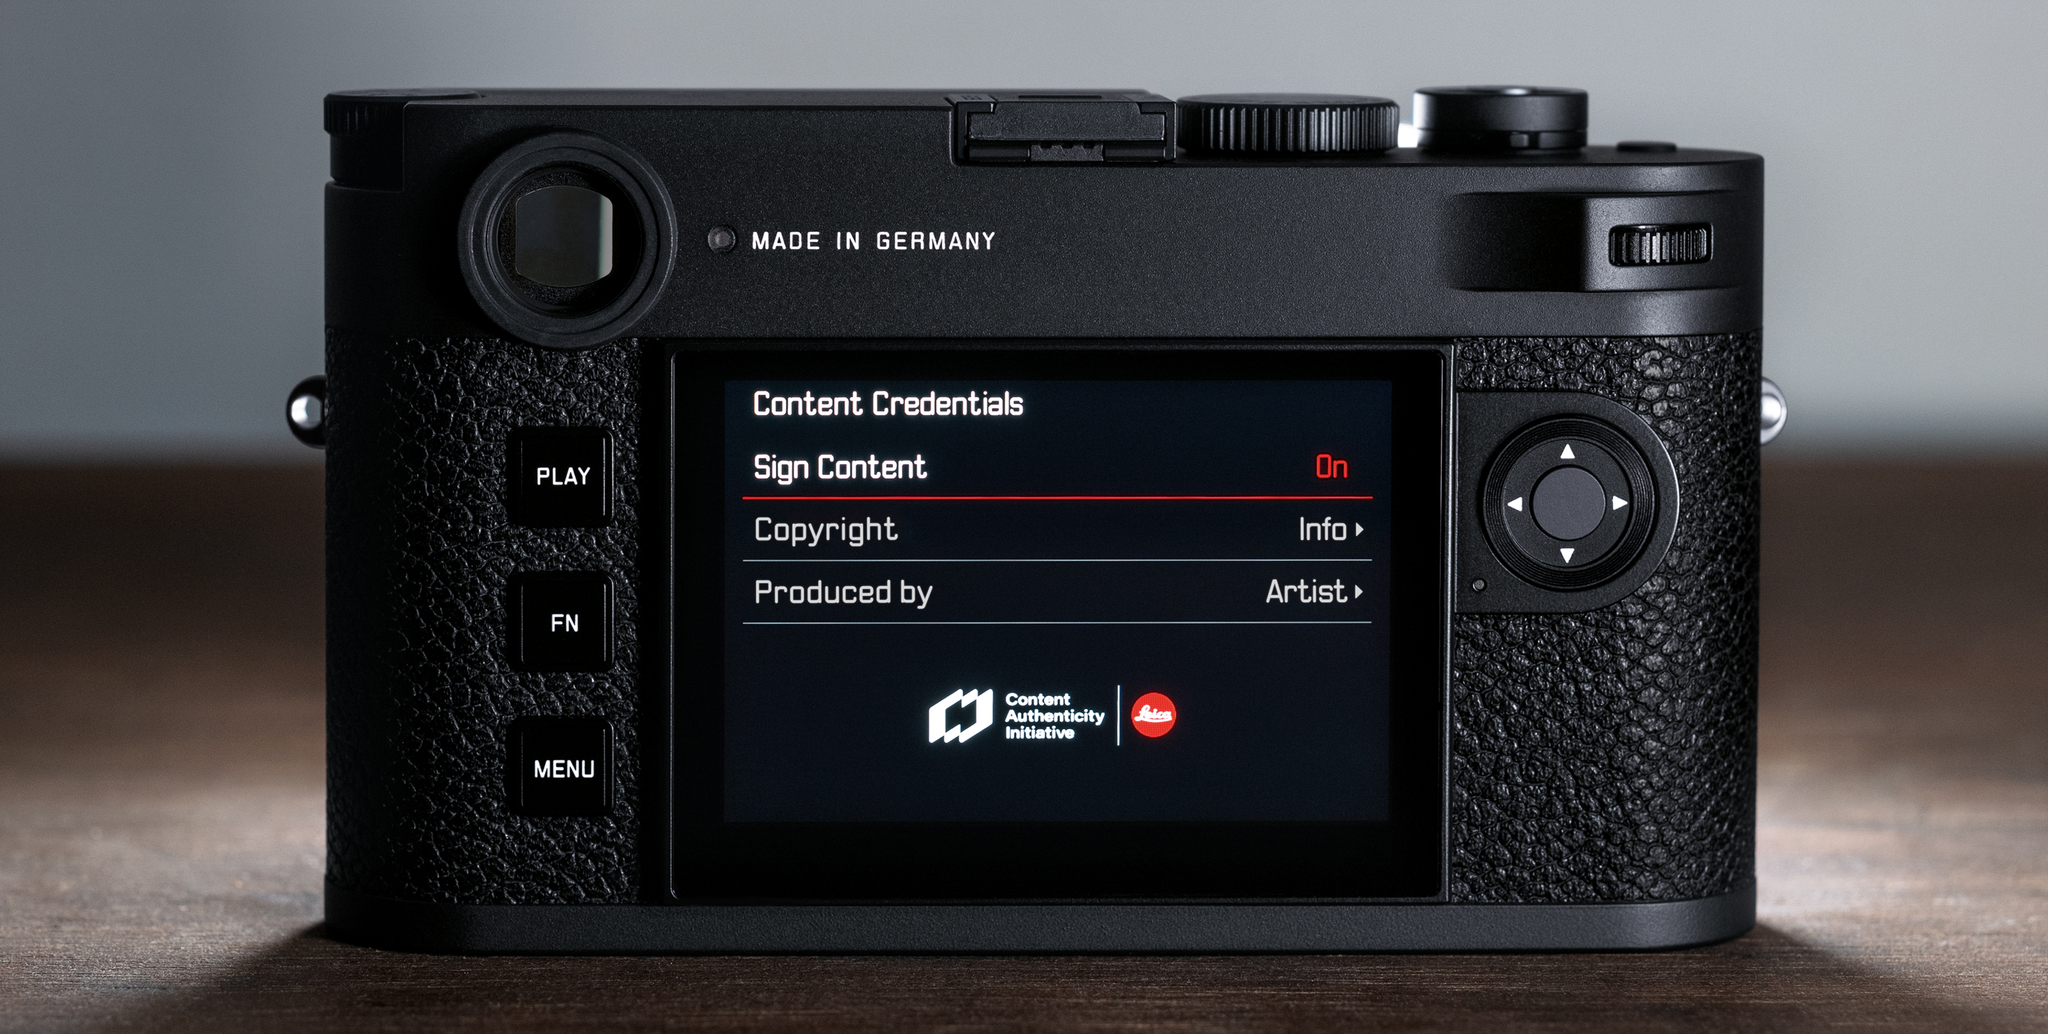 Leica M11-P, showing C2PA setting on the menu screen